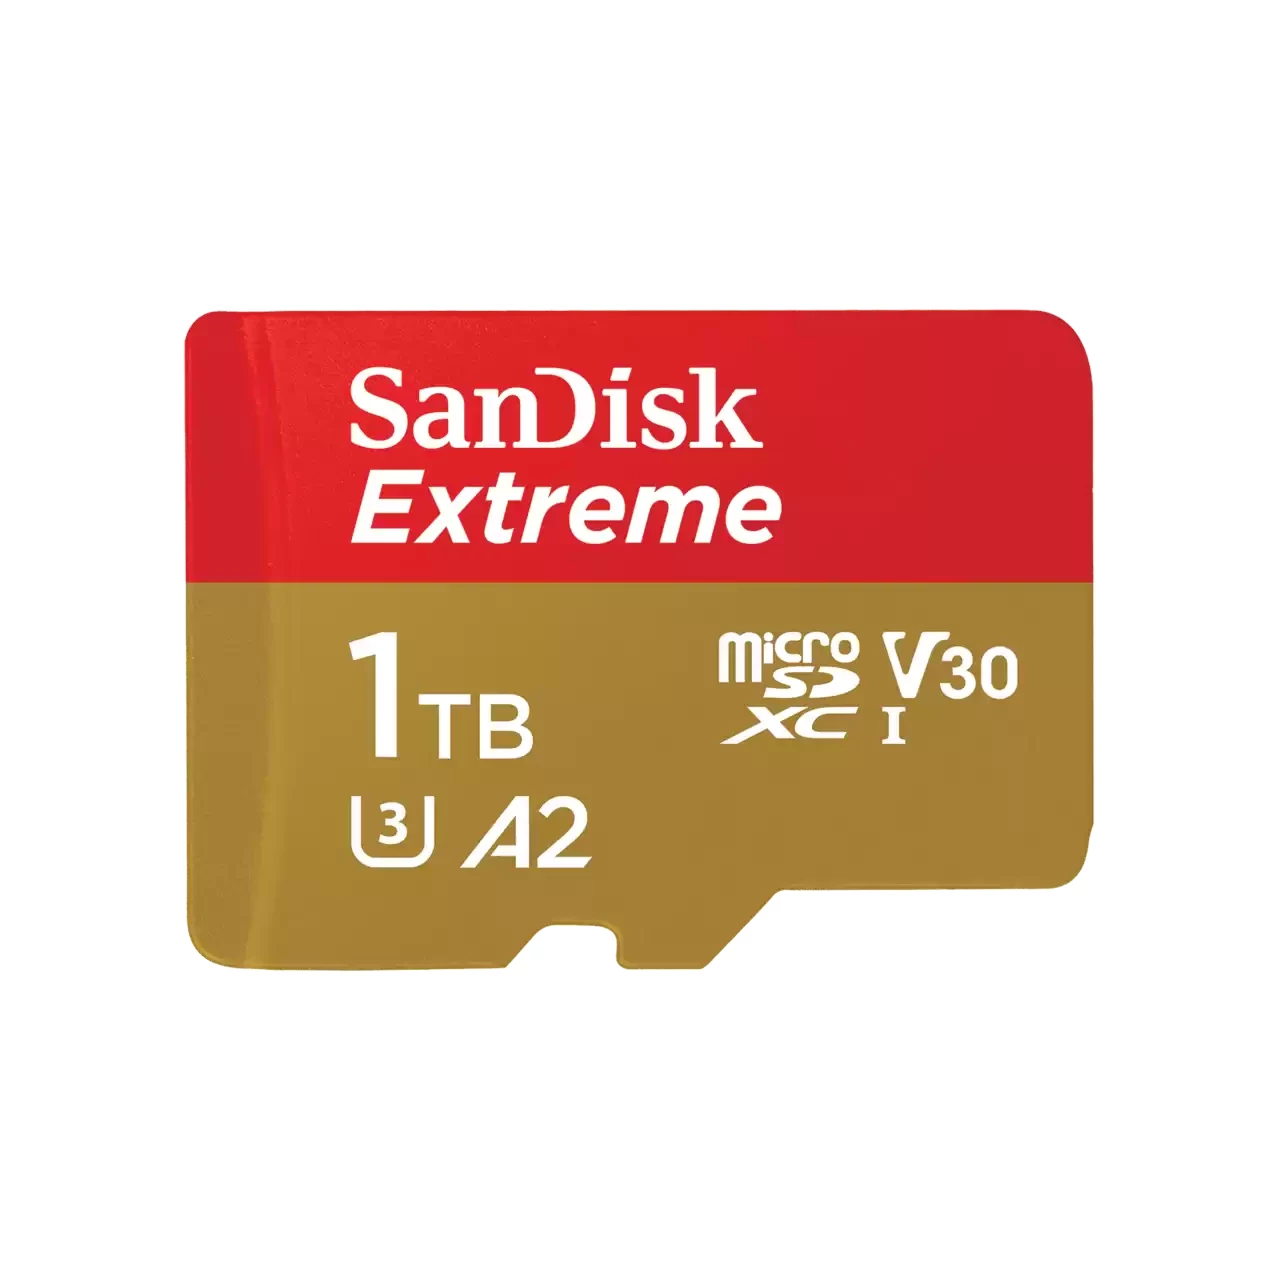 Sandisk Extreme 1Tb MicroSDXC UHS-I Memory Card #sDsQXAV-1T00-gN6MN